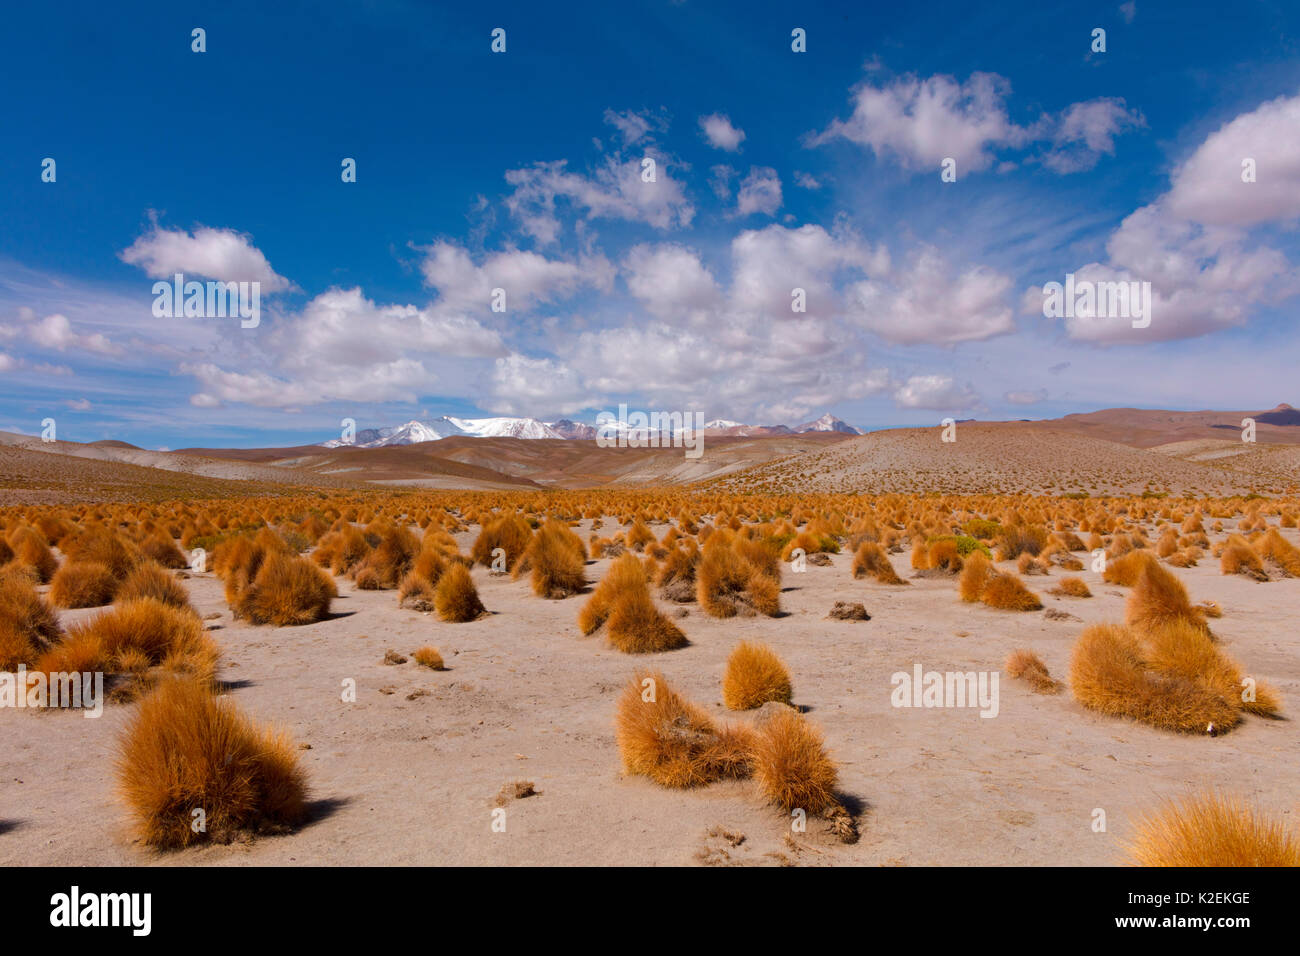 High Altiplano with tussock grass called Paja brava (Festuca orthophylla). Ciudad del Encanto, Bolivia. Stock Photo